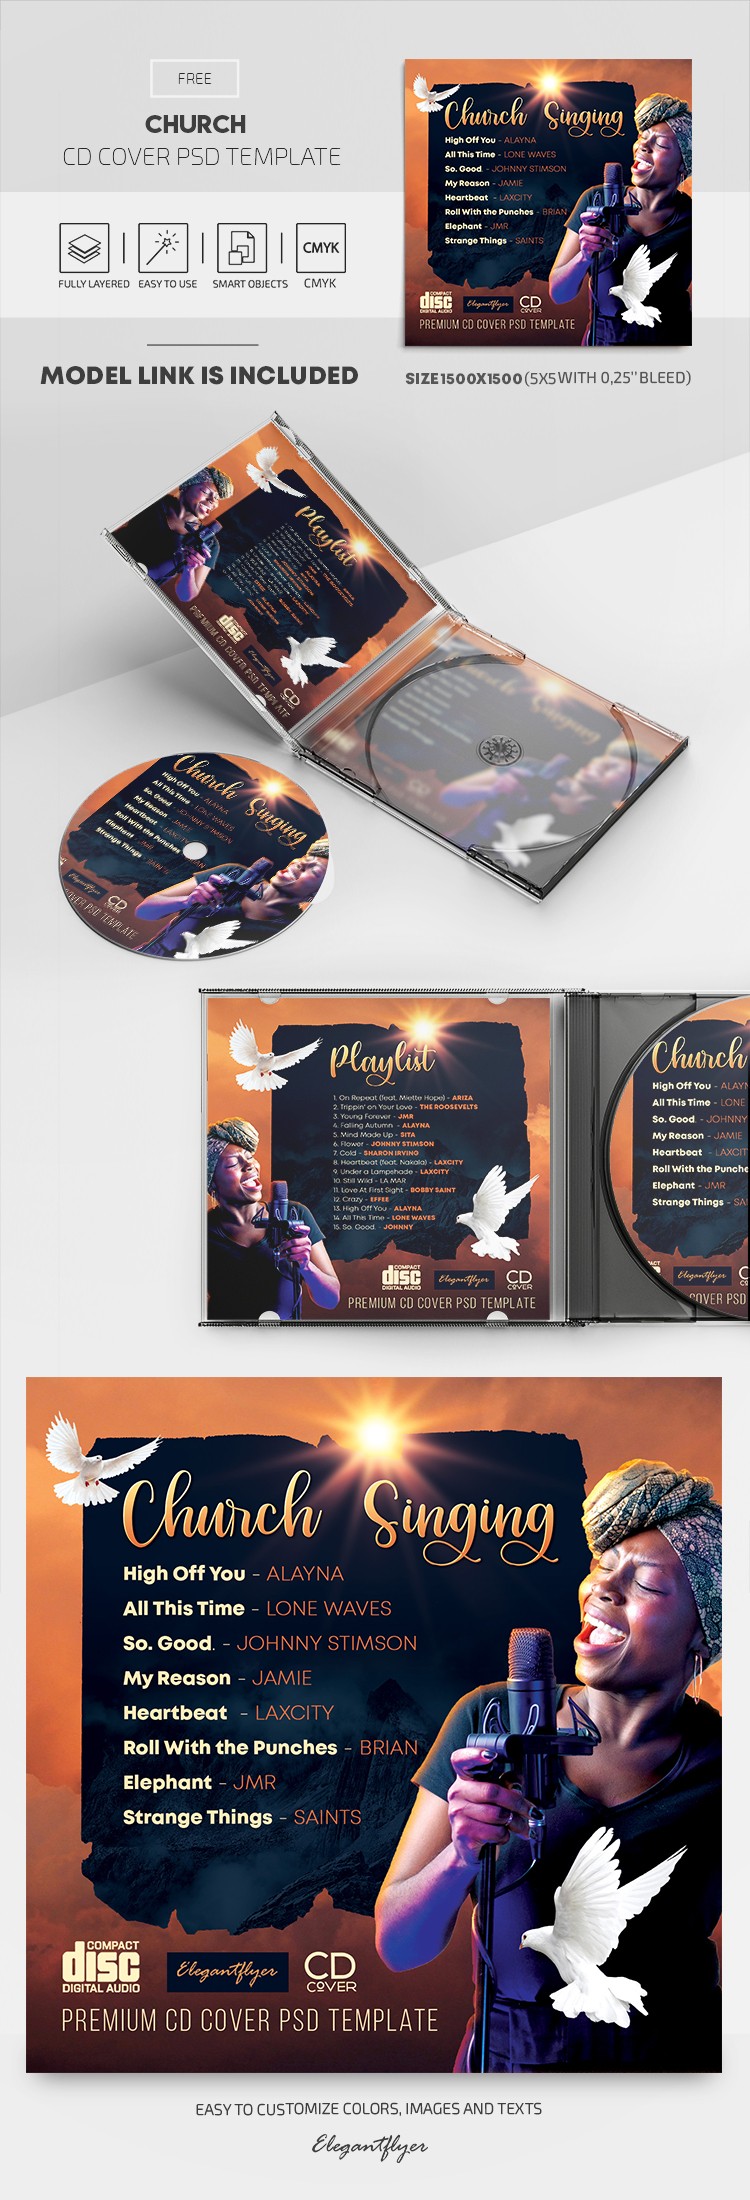 Church CD Cover by ElegantFlyer